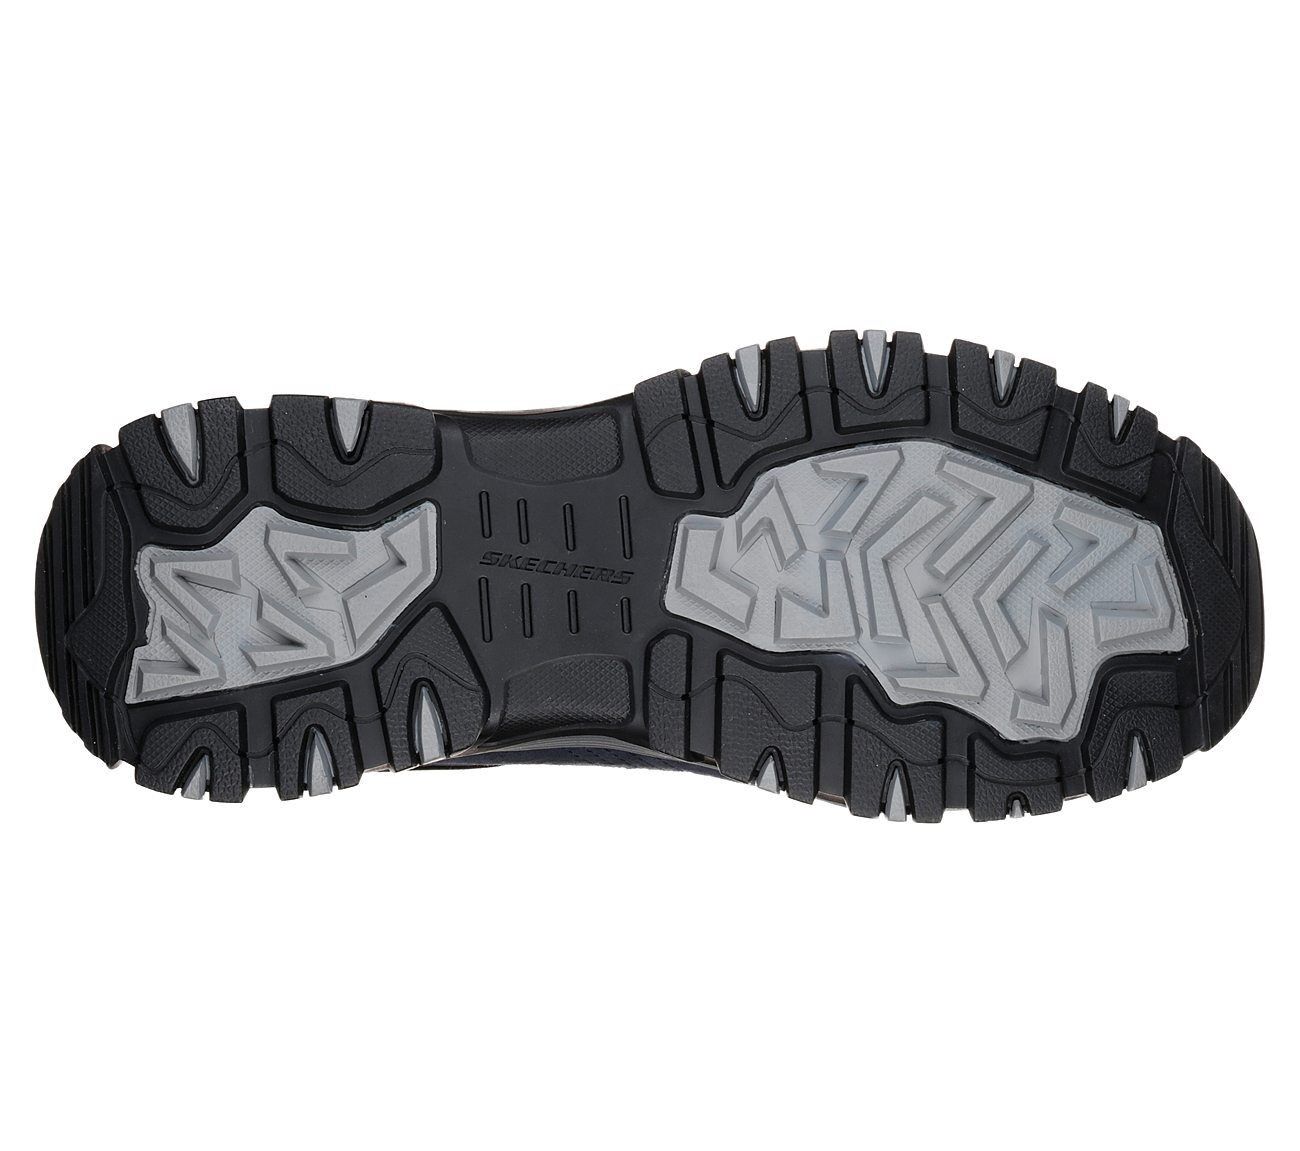 Men's Greetah Lace Comp Toe Waterproof Shoe